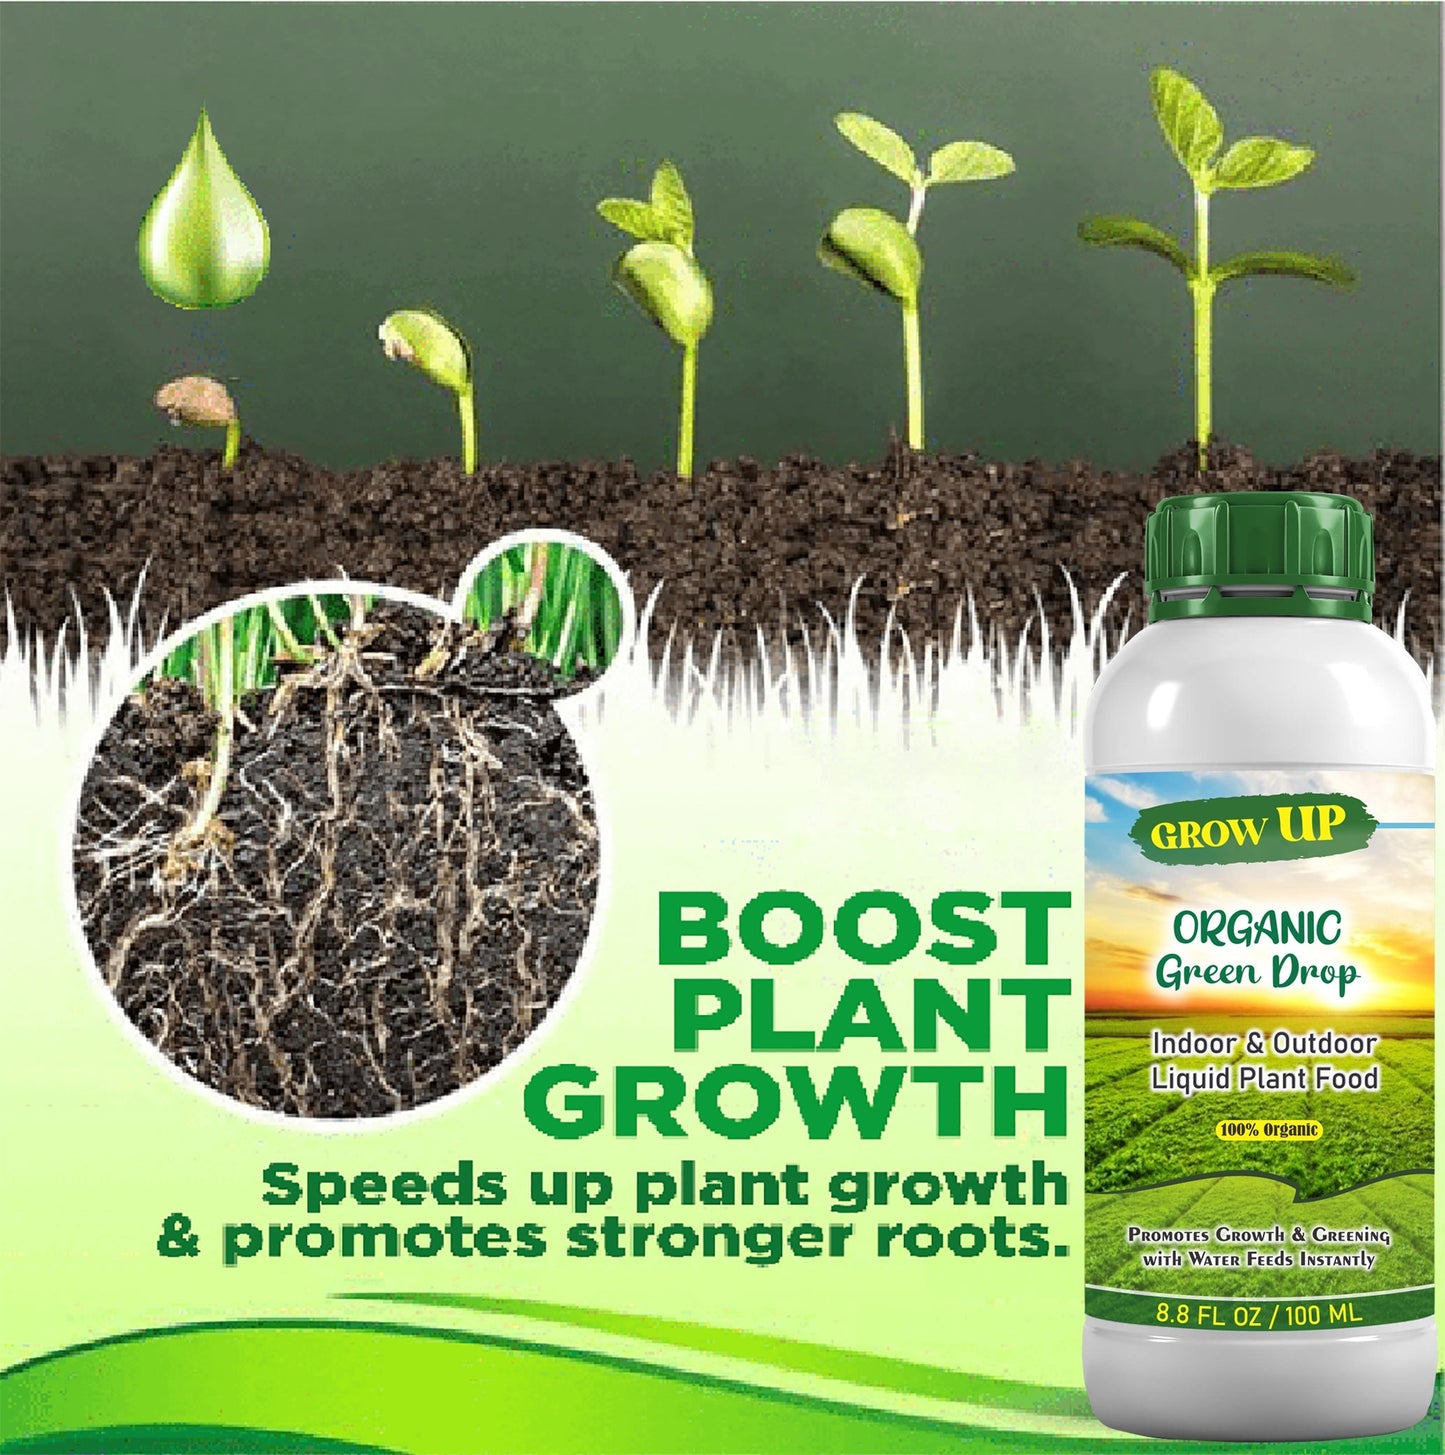 Organic GreenDrop Plant Food Liquid For Growth & Greening